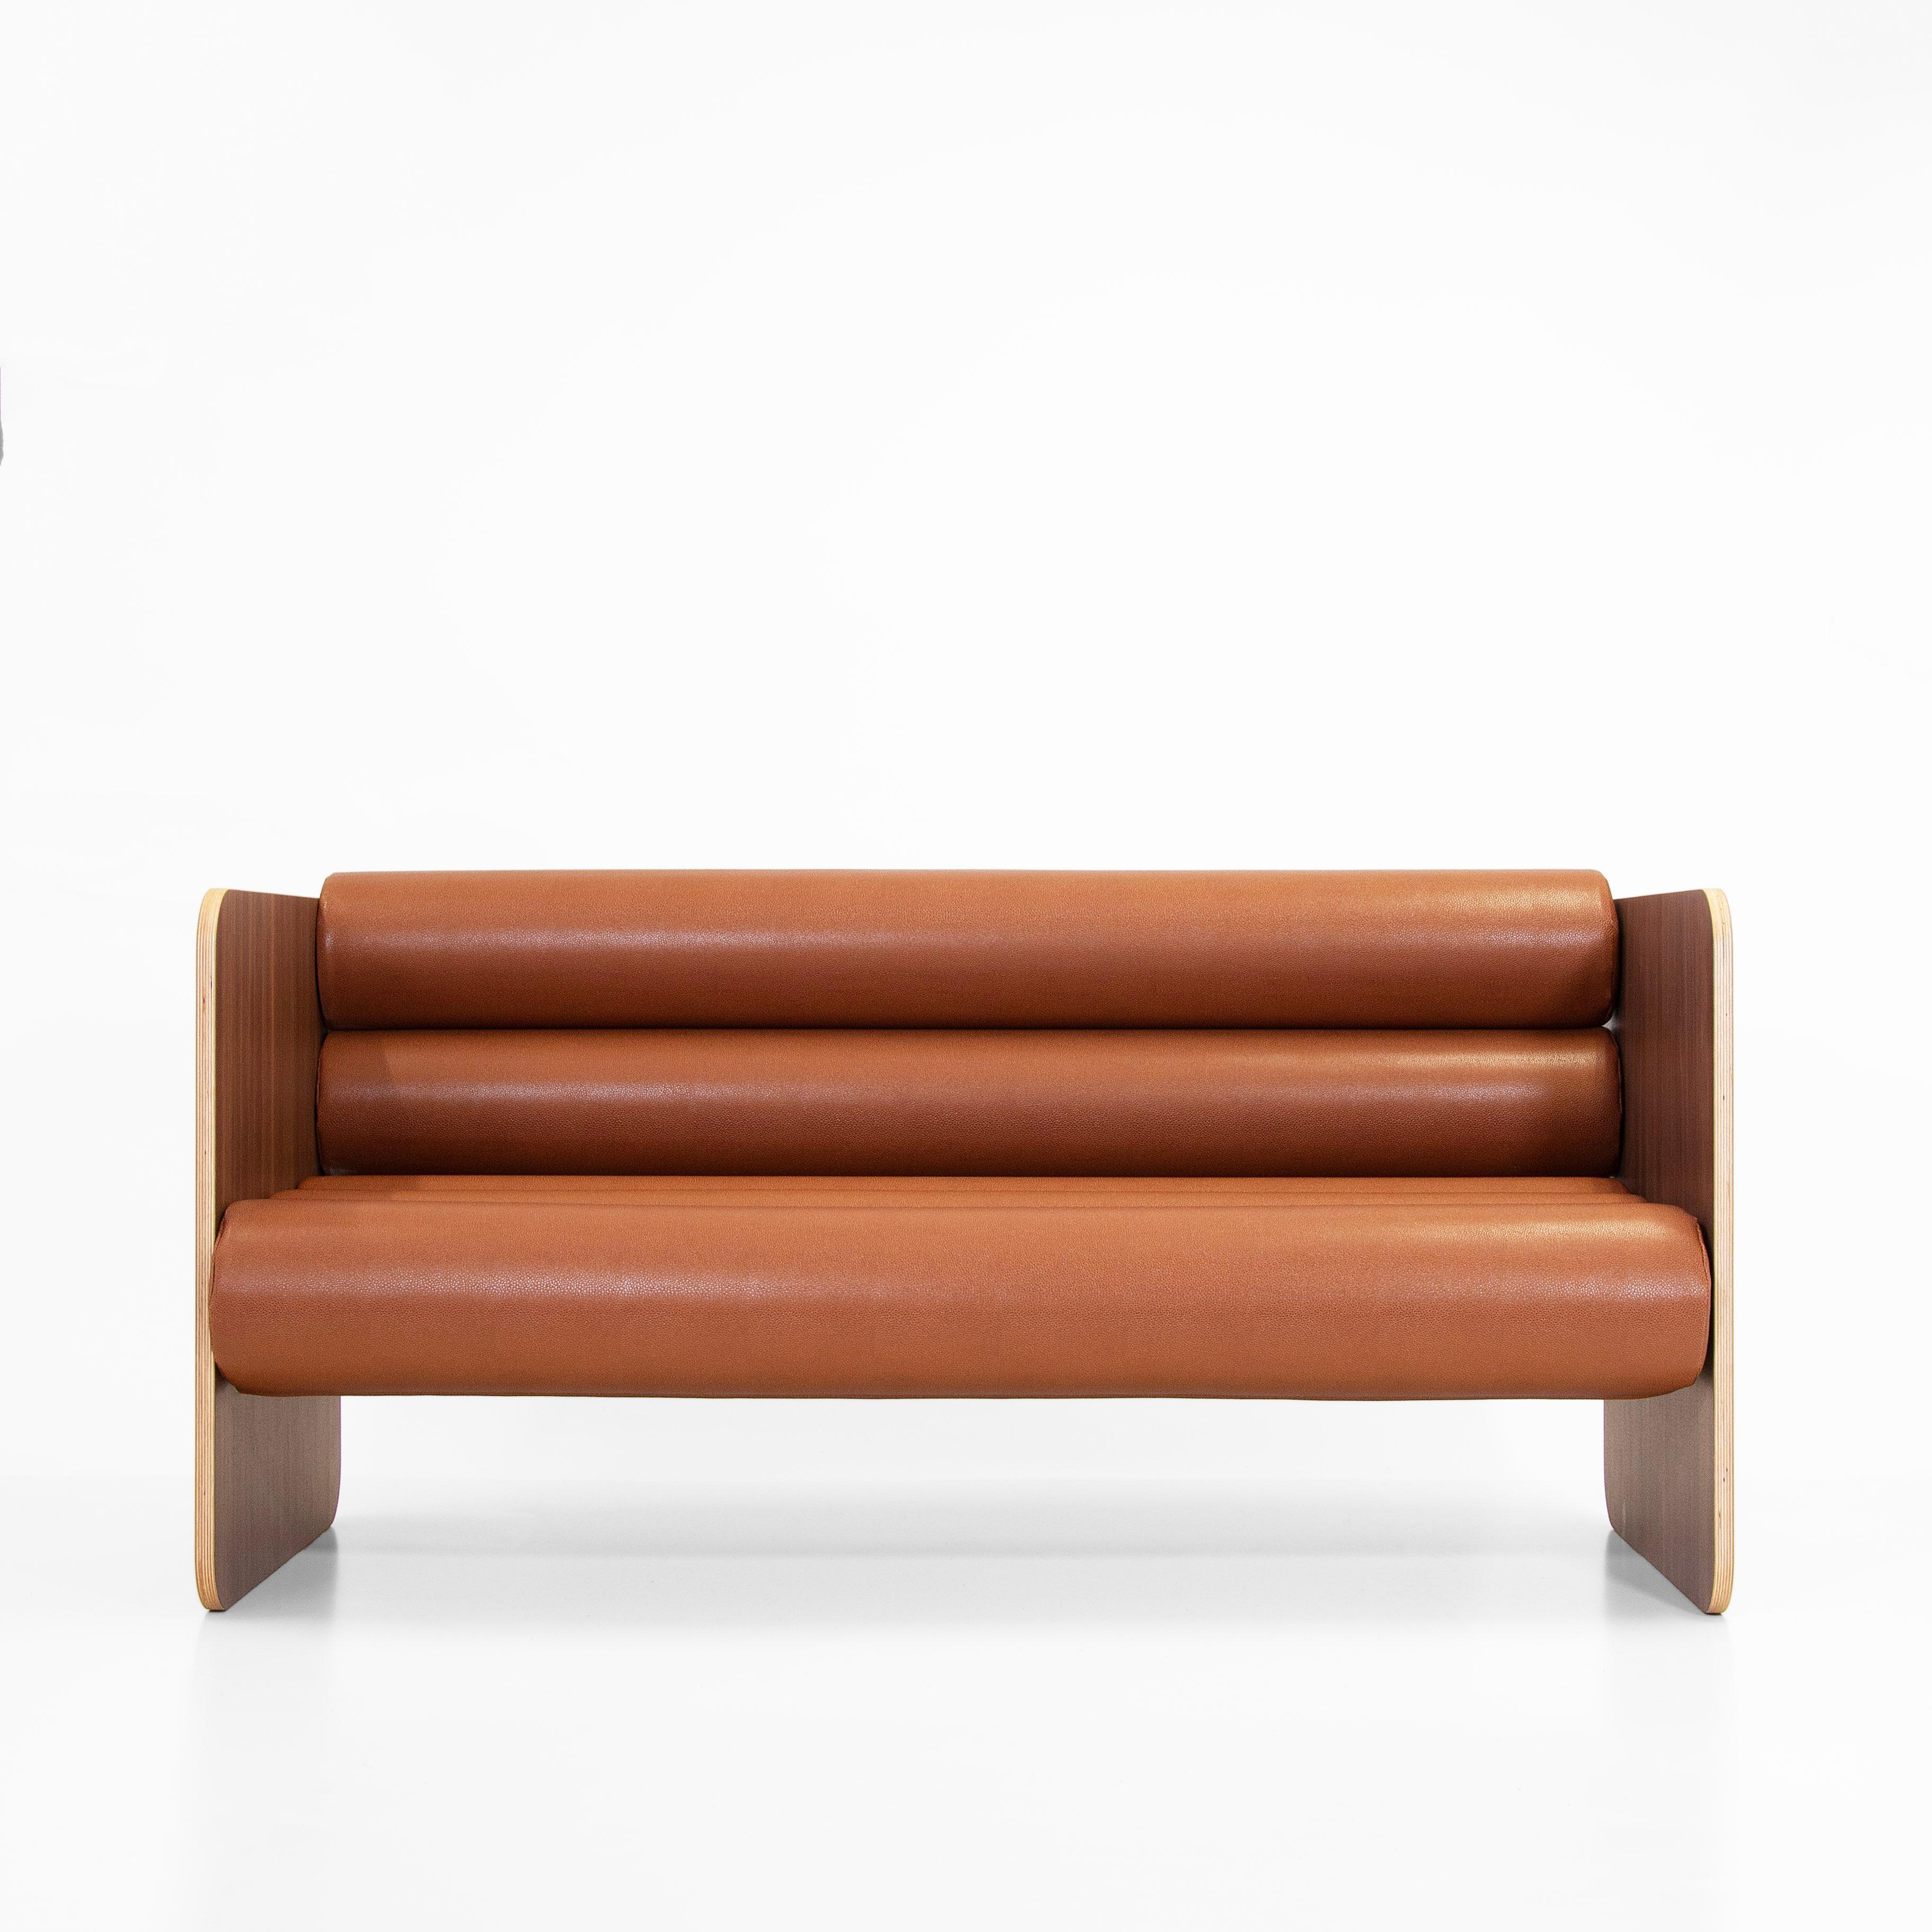 French Design sofa Mw01 